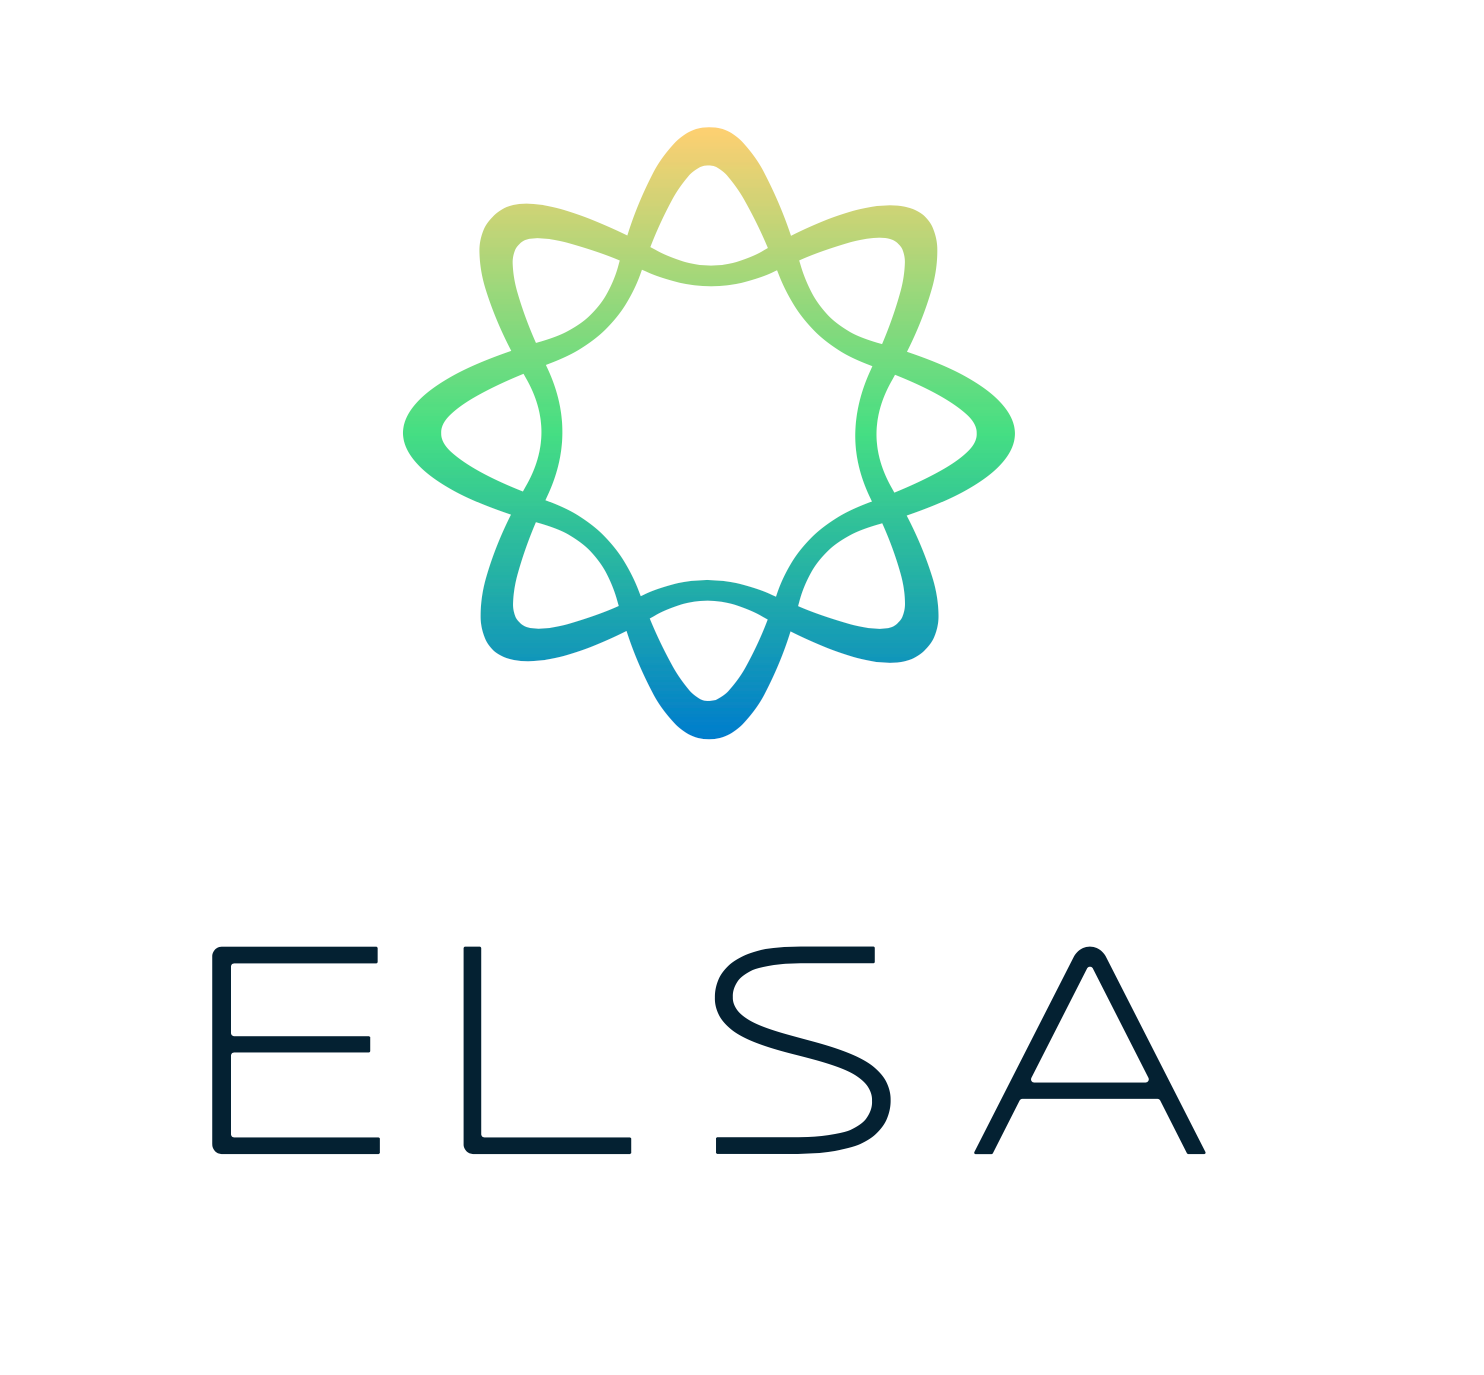 ELSA Logo 20220418 163932 e1650292191195 ArdorComm Media Group ArdorComm- Higher Education and EdTech Conclave & Awards